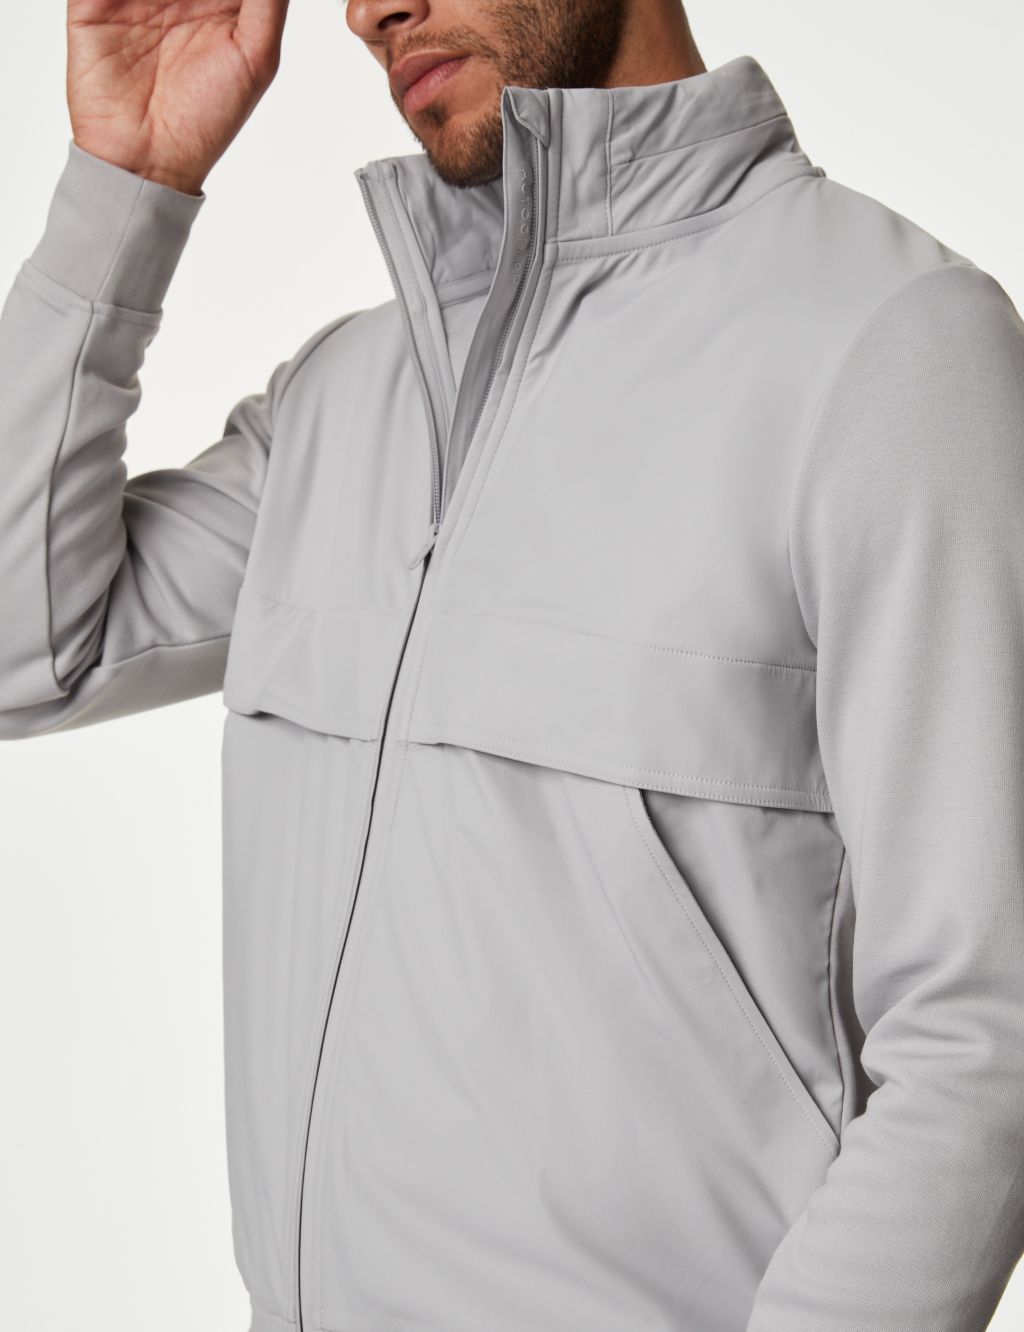 Packaway Hood Zip Up Jacket with Stormwear™ 8 of 9